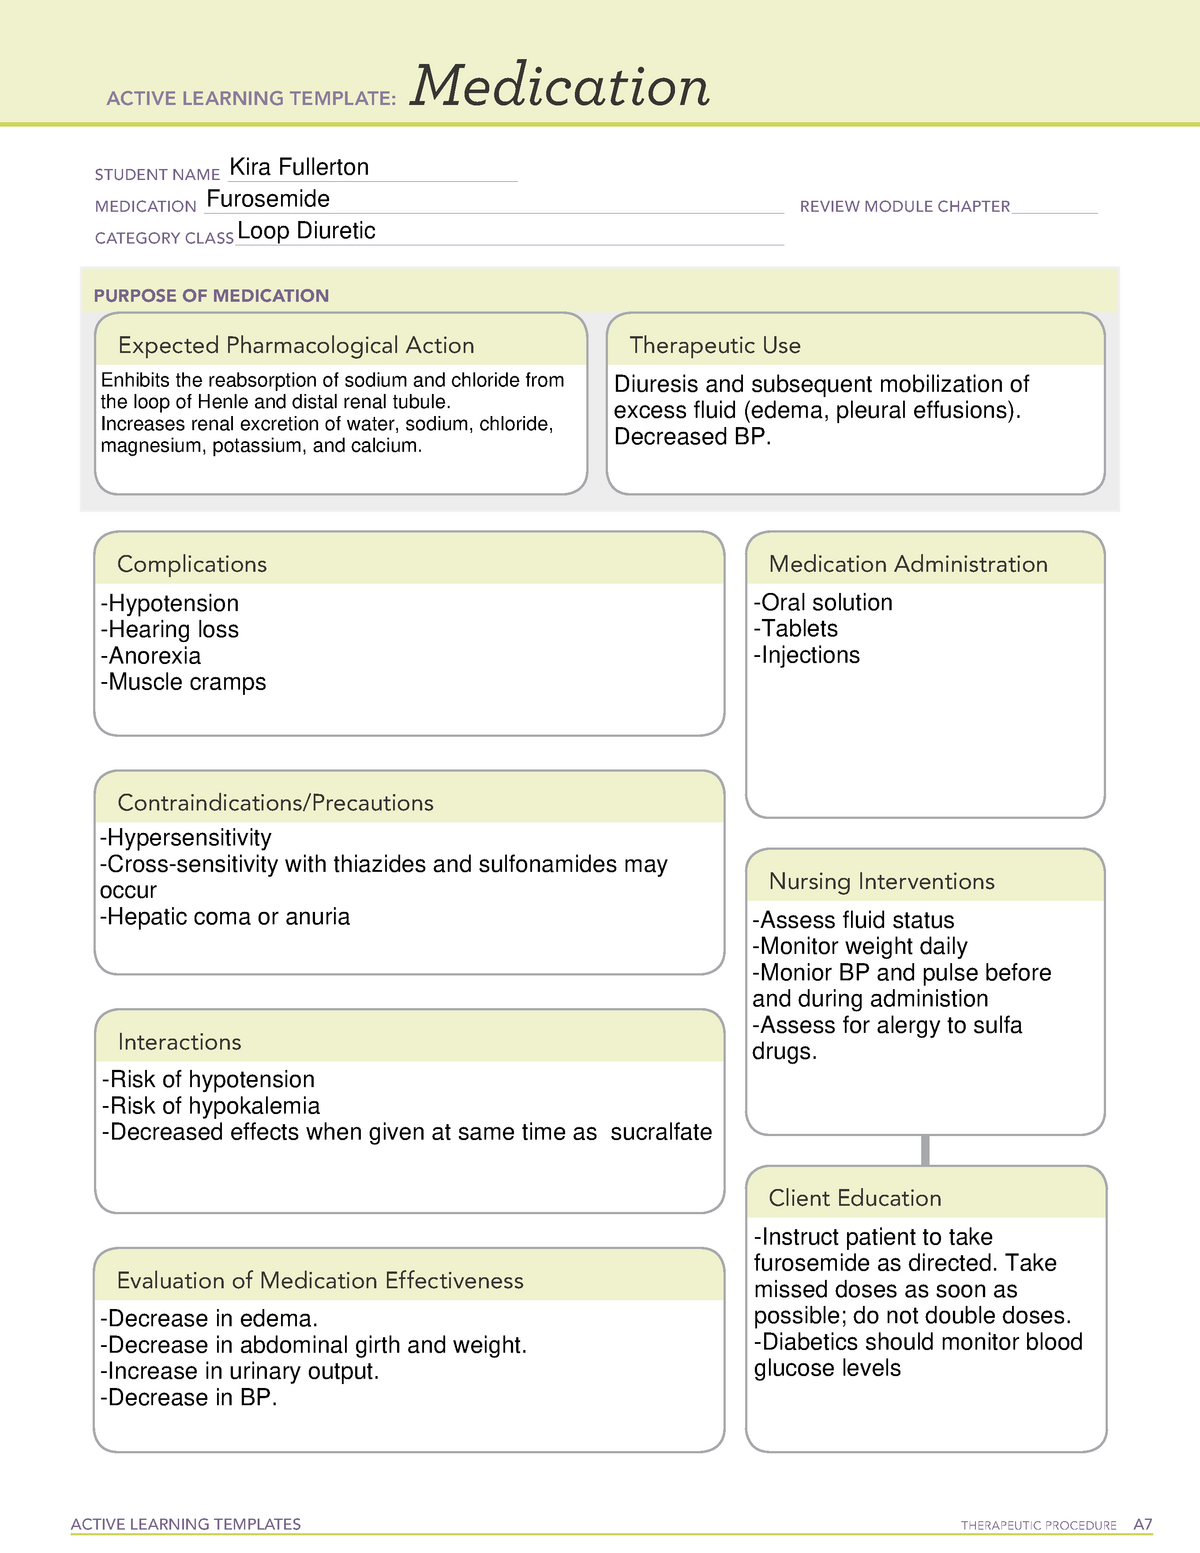 med-furosemide-ati-medications-sheet-active-learning-templates